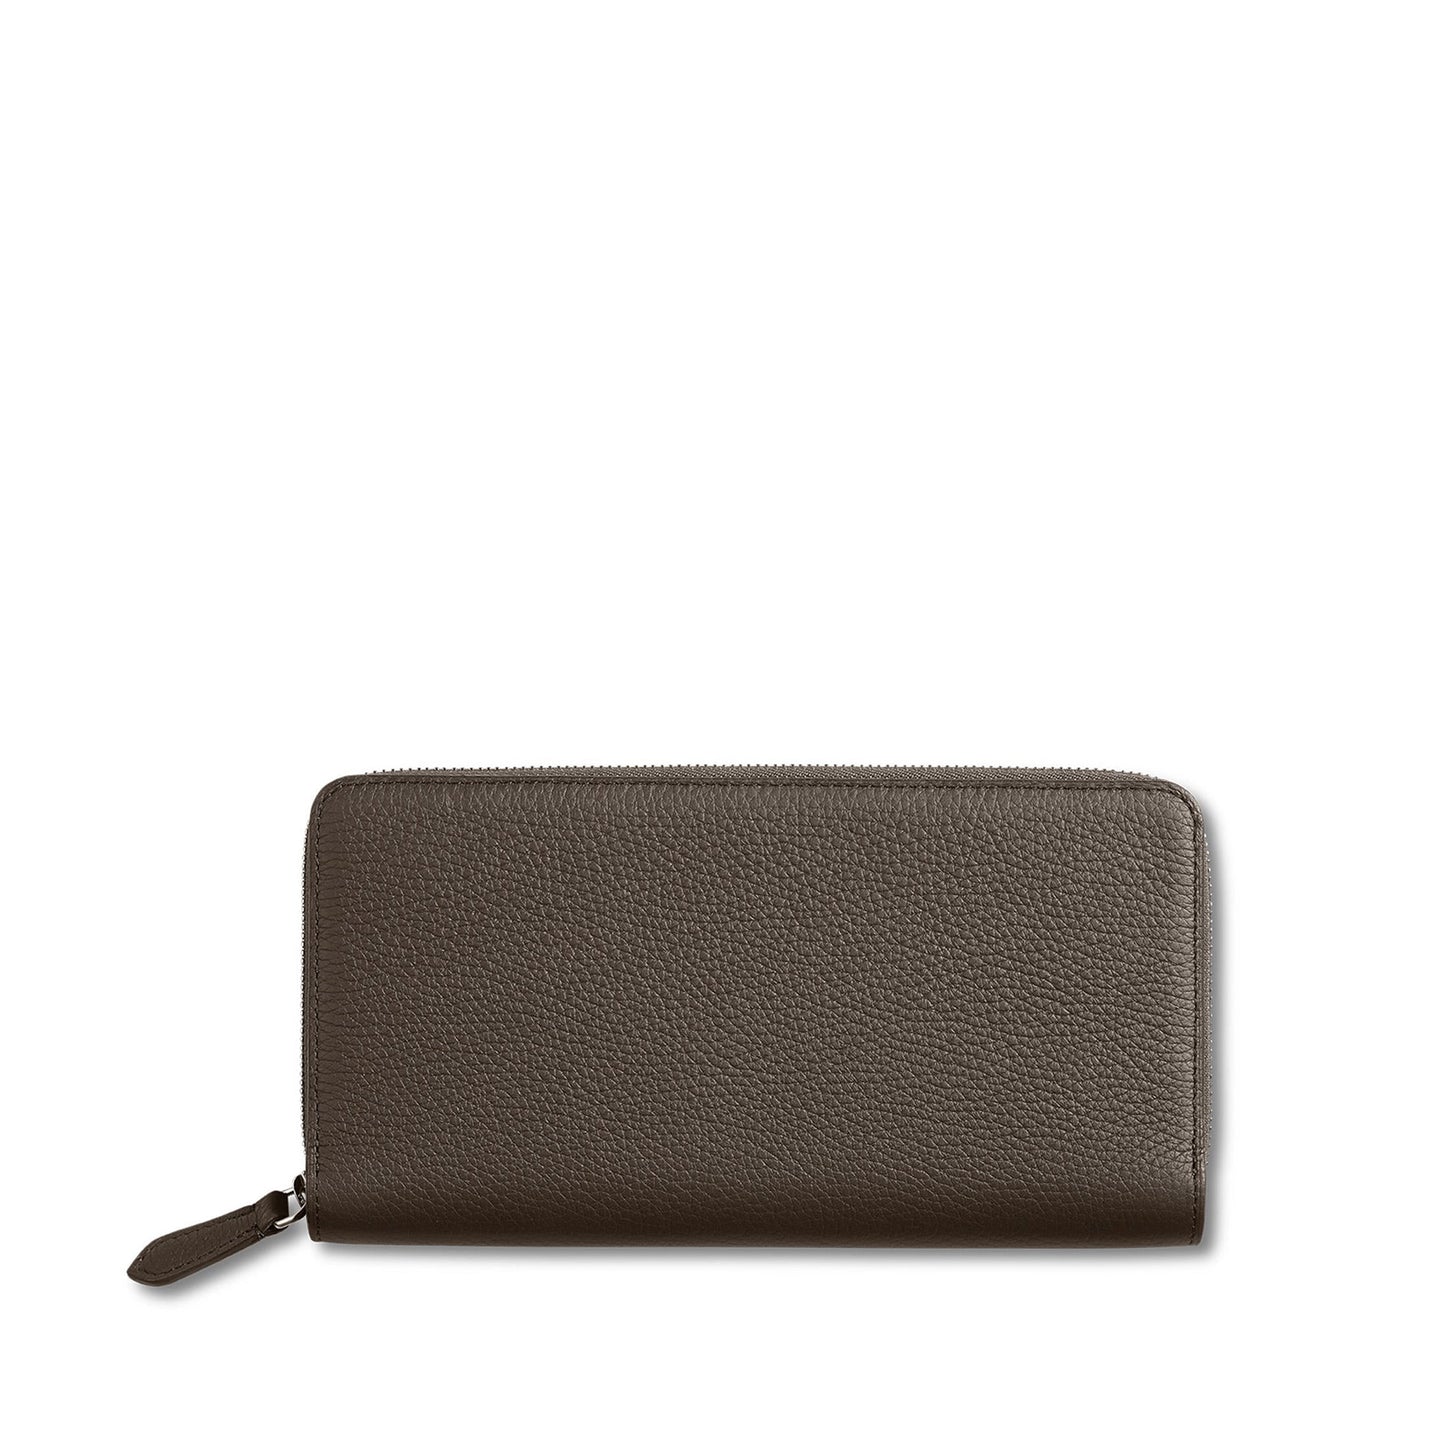 GMT Zip Travel Wallet in Soft Grain Leather